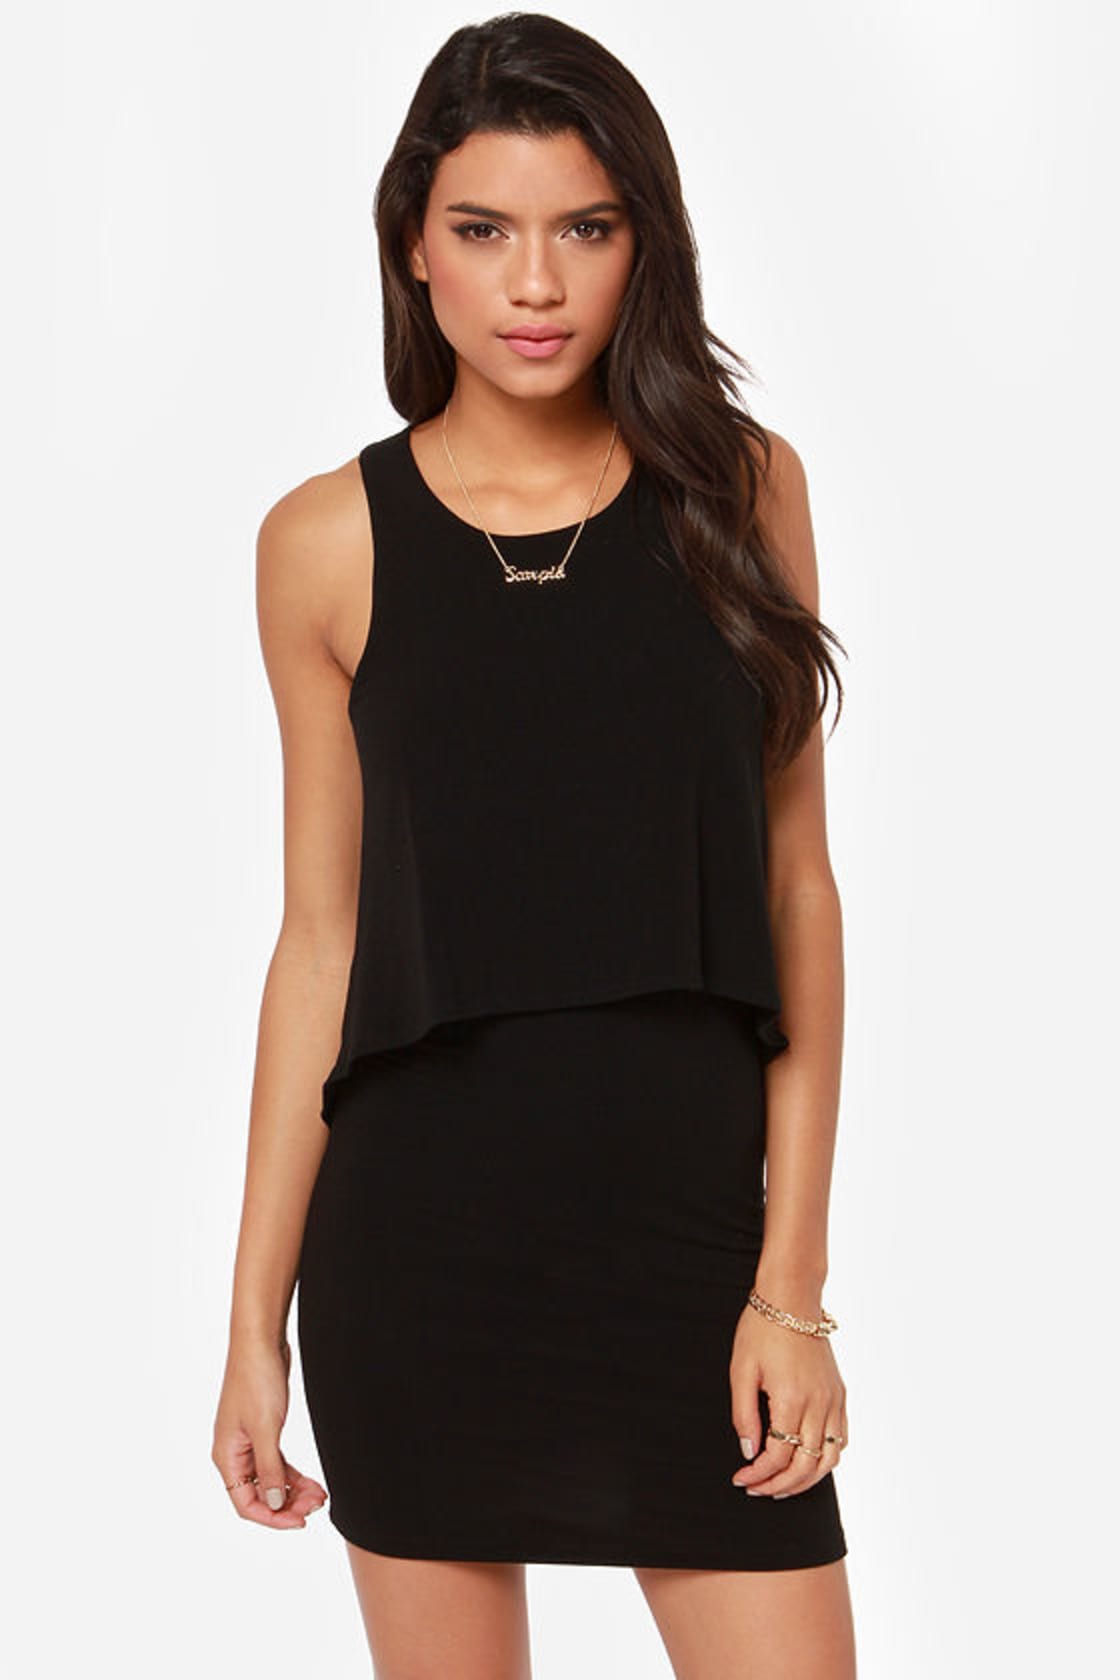 Cute Sleeveless Dress - Black Dress - LBD - $38.00 - Lulus